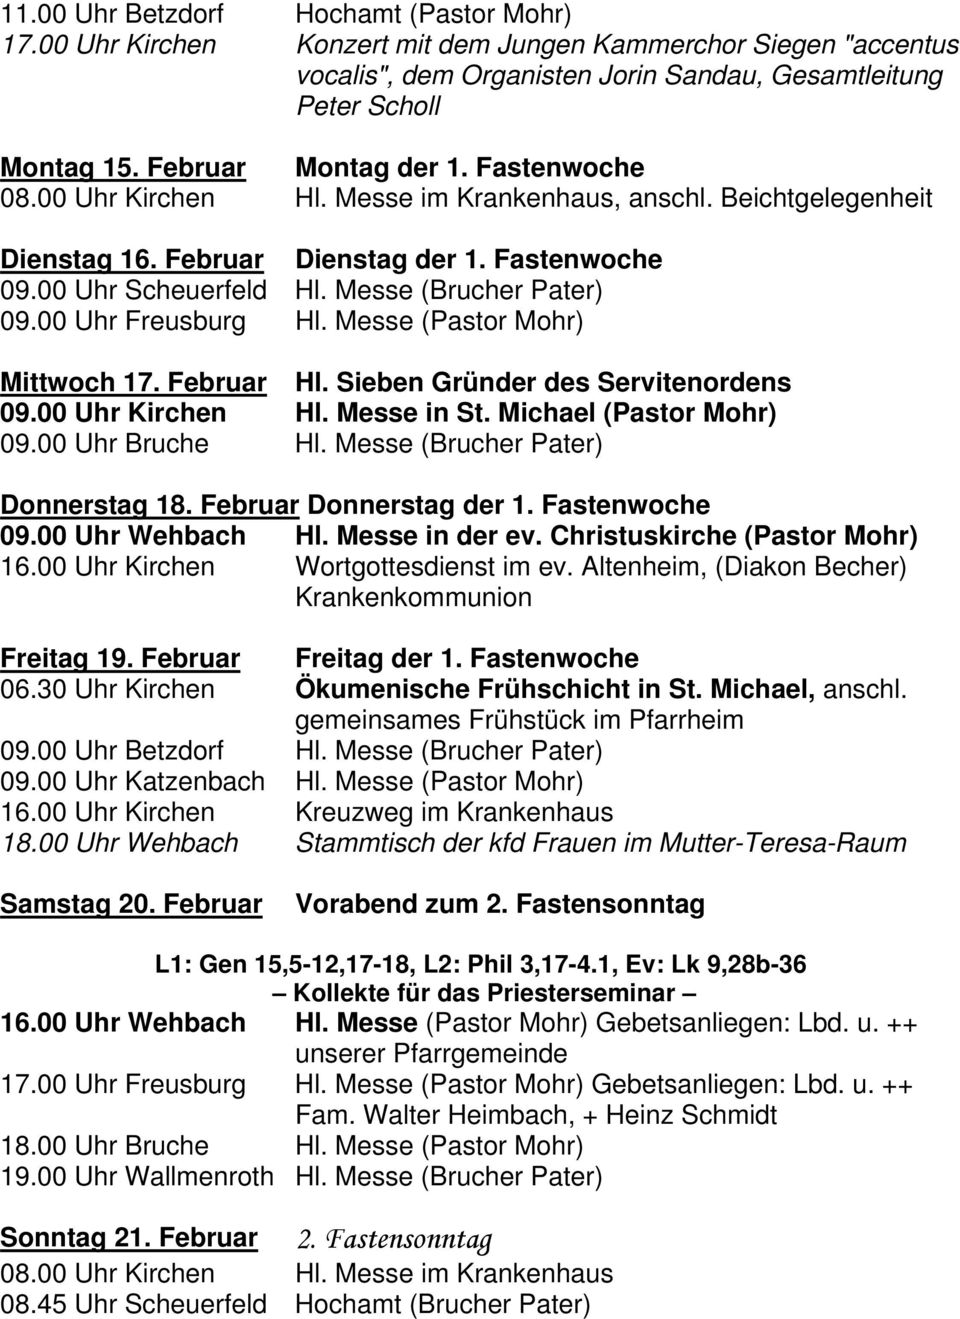 Messe (Brucher Pater) 09.00 Uhr Freusburg Hl. Messe (Pastor Mohr) Mittwoch 17. Februar Hl. Sieben Gründer des Servitenordens 09.00 Uhr Kirchen Hl. Messe in St. Michael (Pastor Mohr) 09.